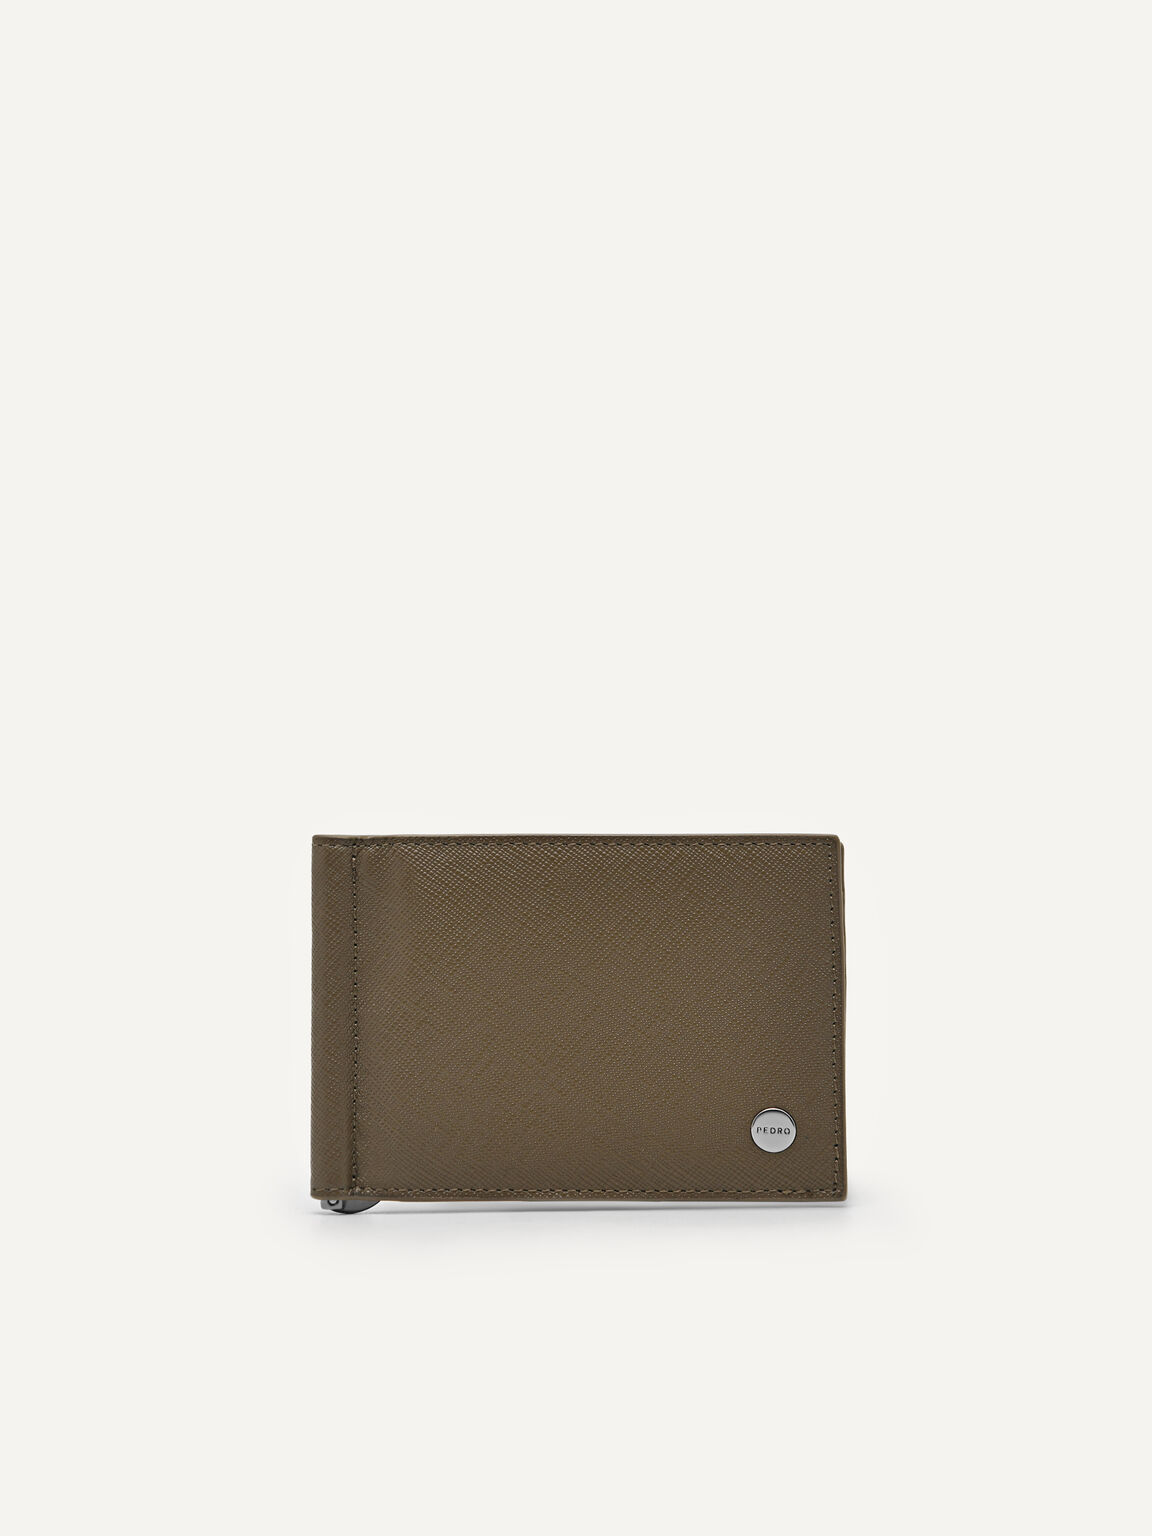 Textured Leather Bi-Fold Money Clip, Olive